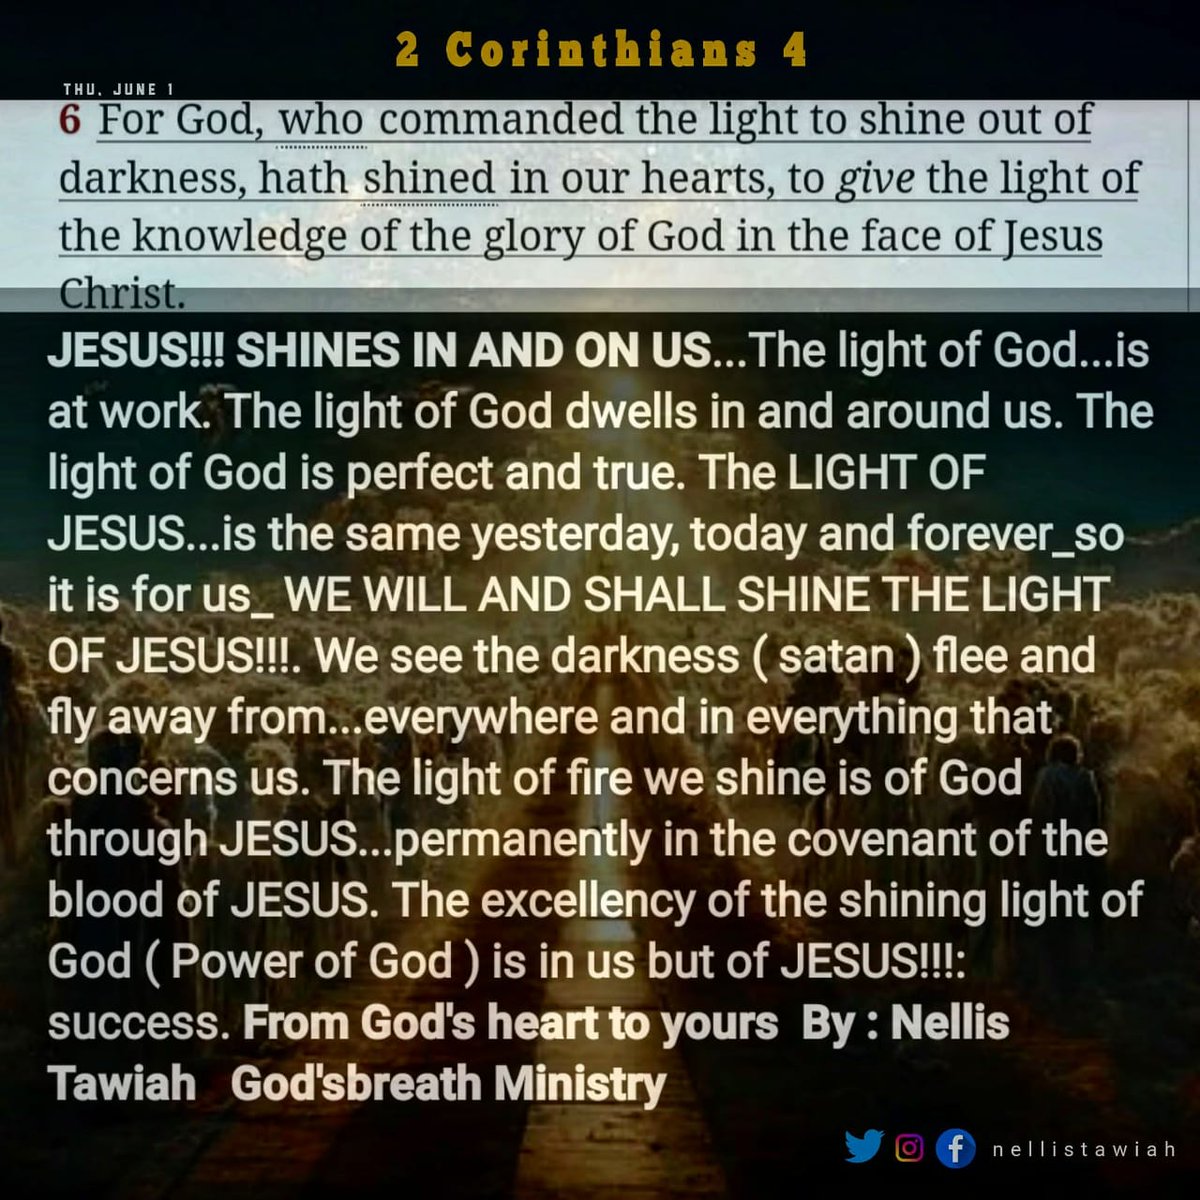 *JESUS!!! SHINES IN AND ON US*

#Twitter #scripture #scripturedaily #thelightofGod #mercyspeaksbest #jesusislord